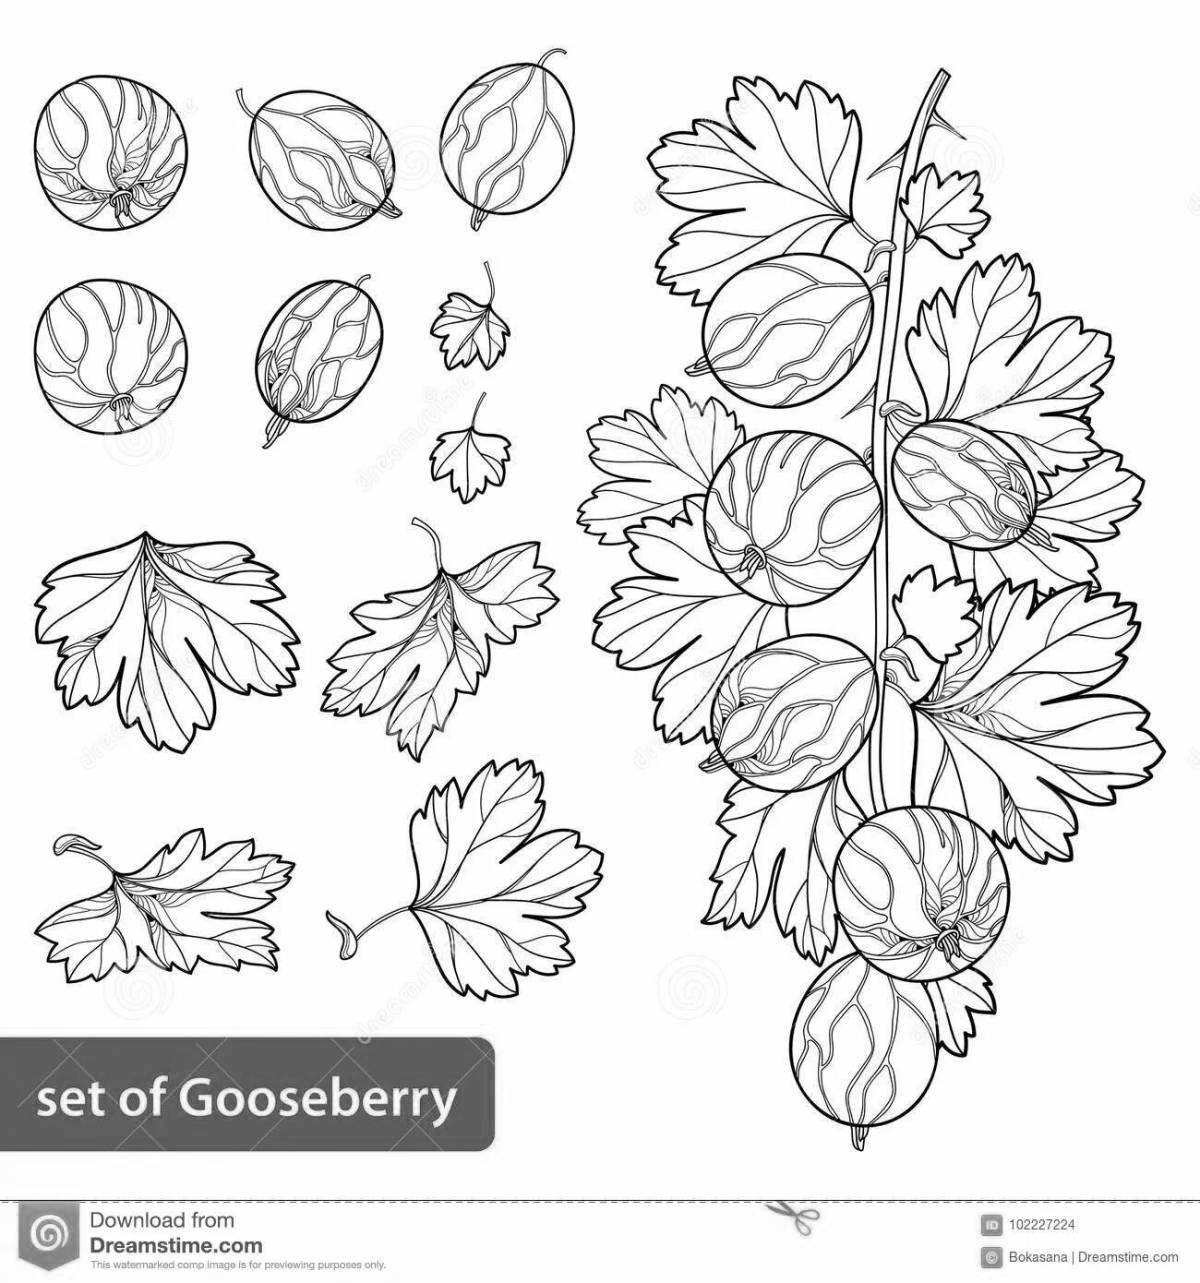 Fun gooseberry coloring book for kids